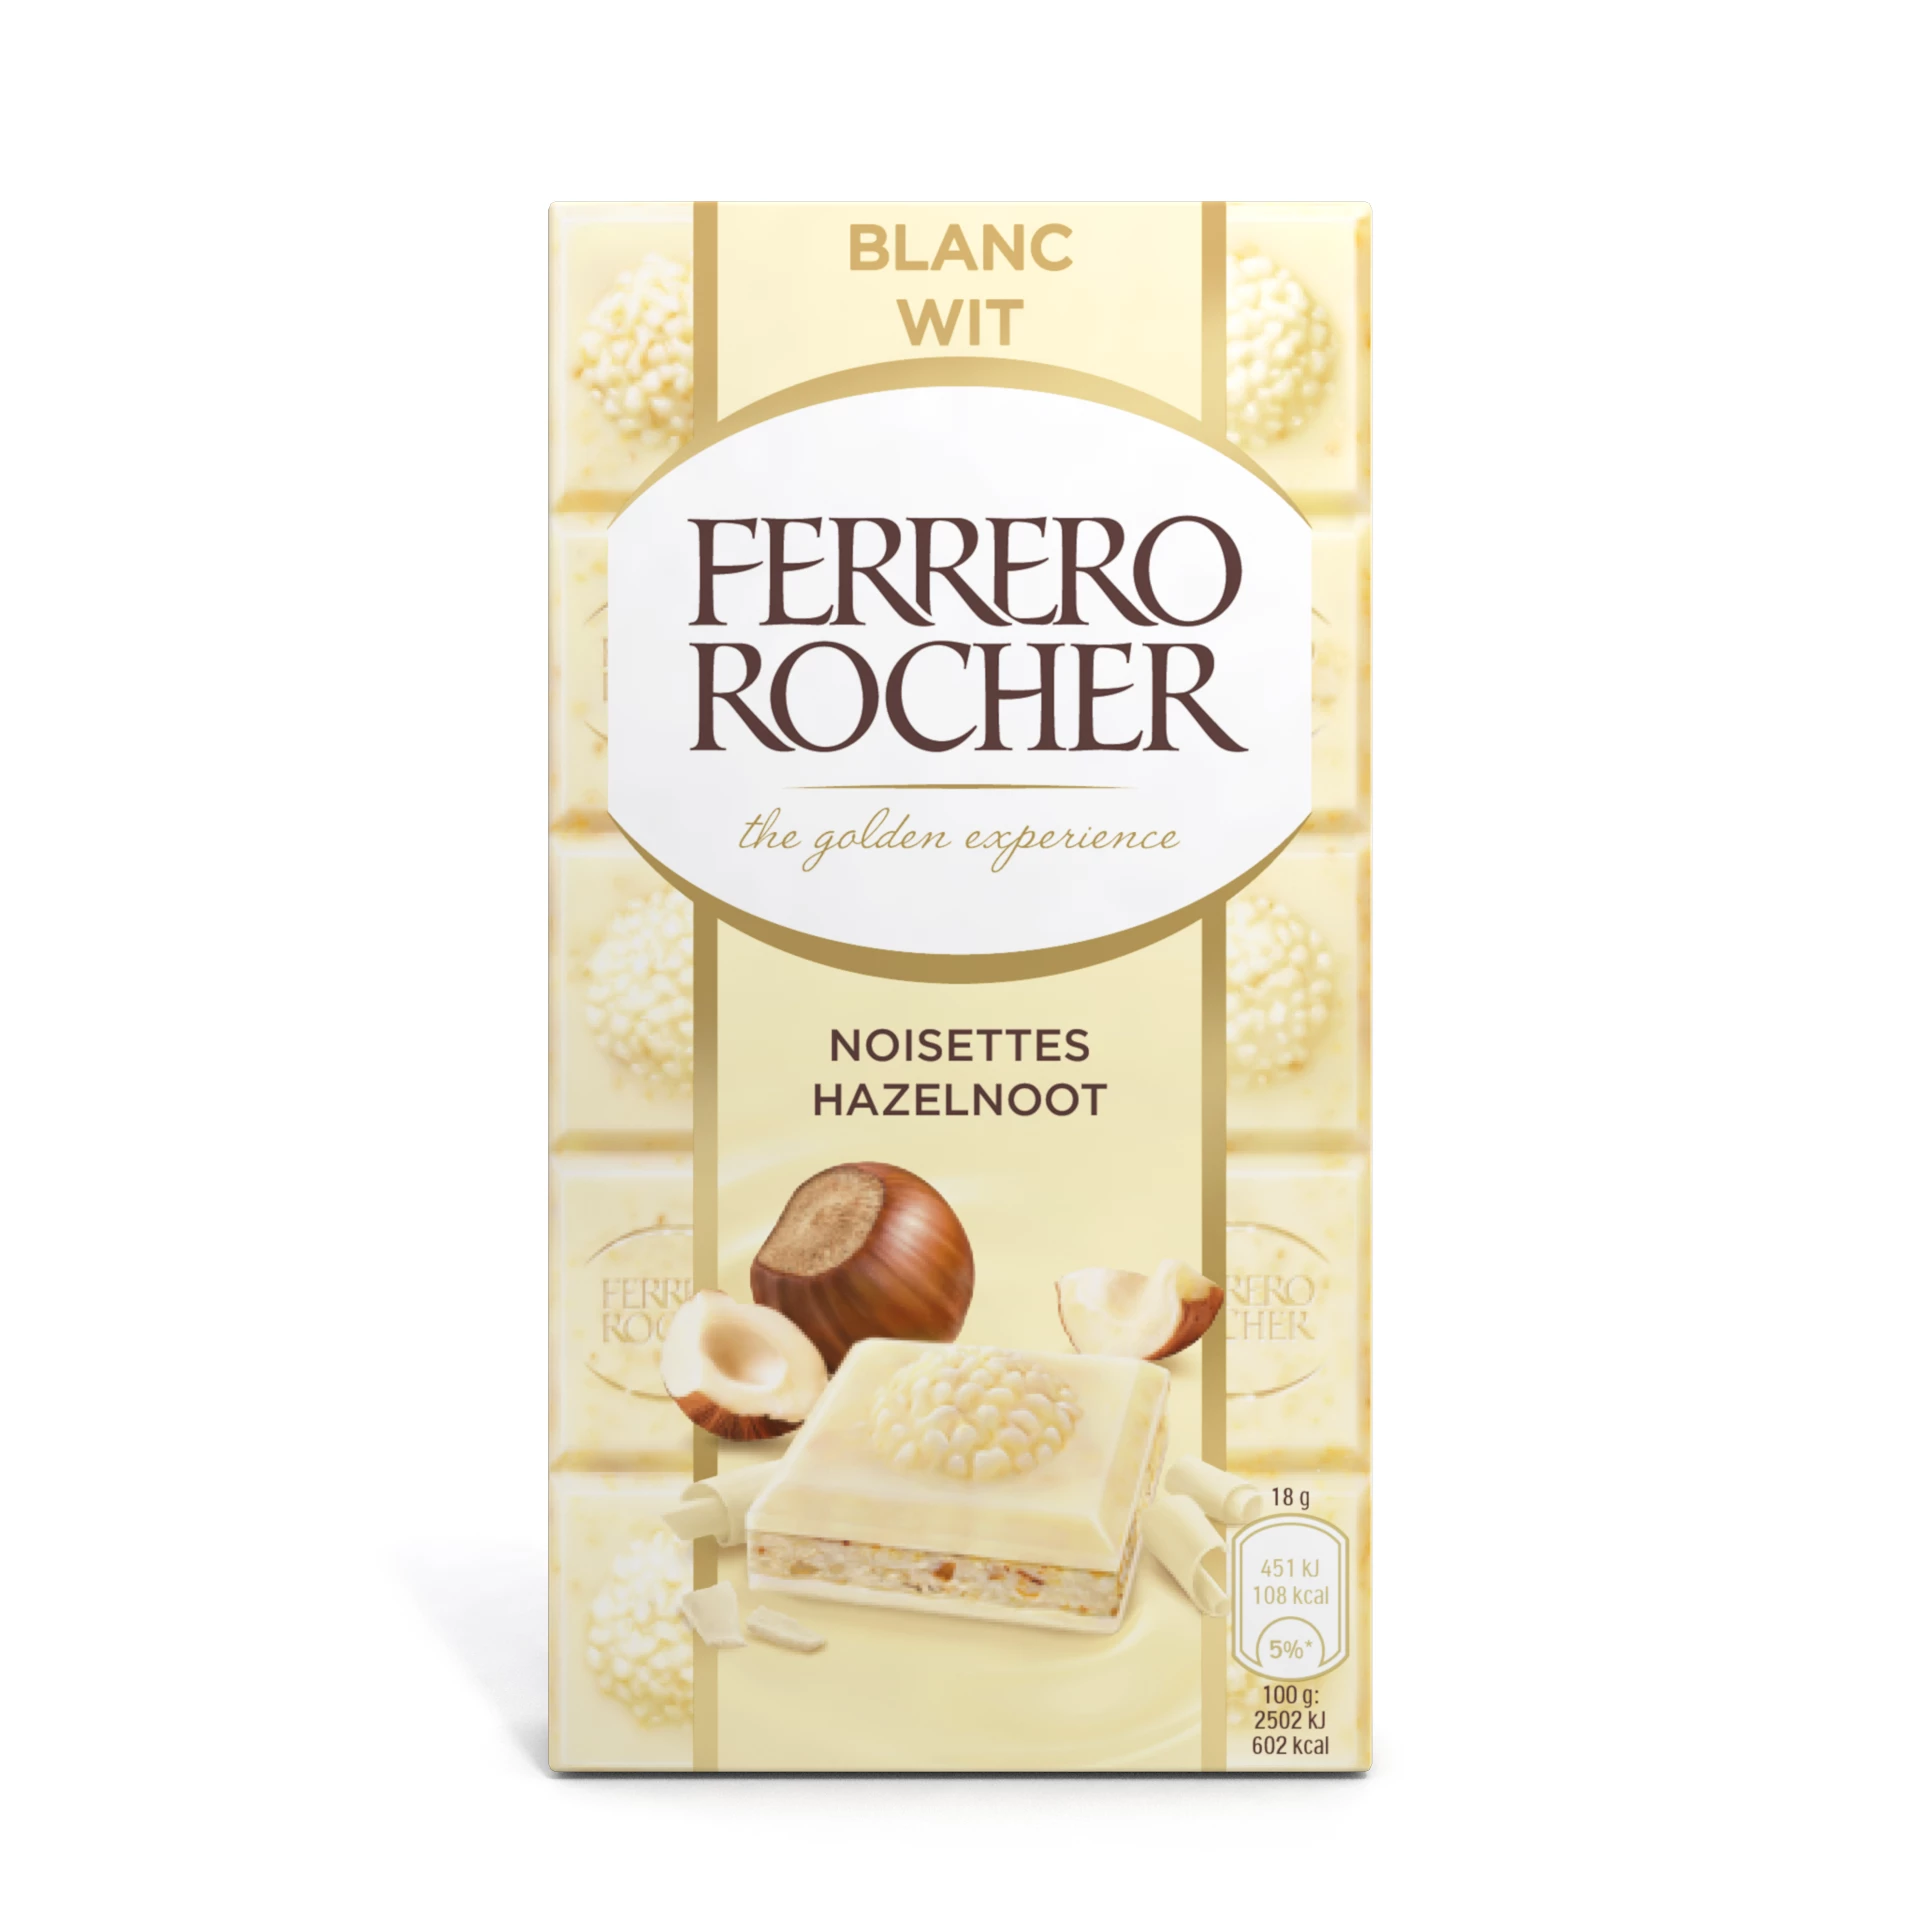 Ferrero Rocher White Hazelnut, 90g - FERRERO